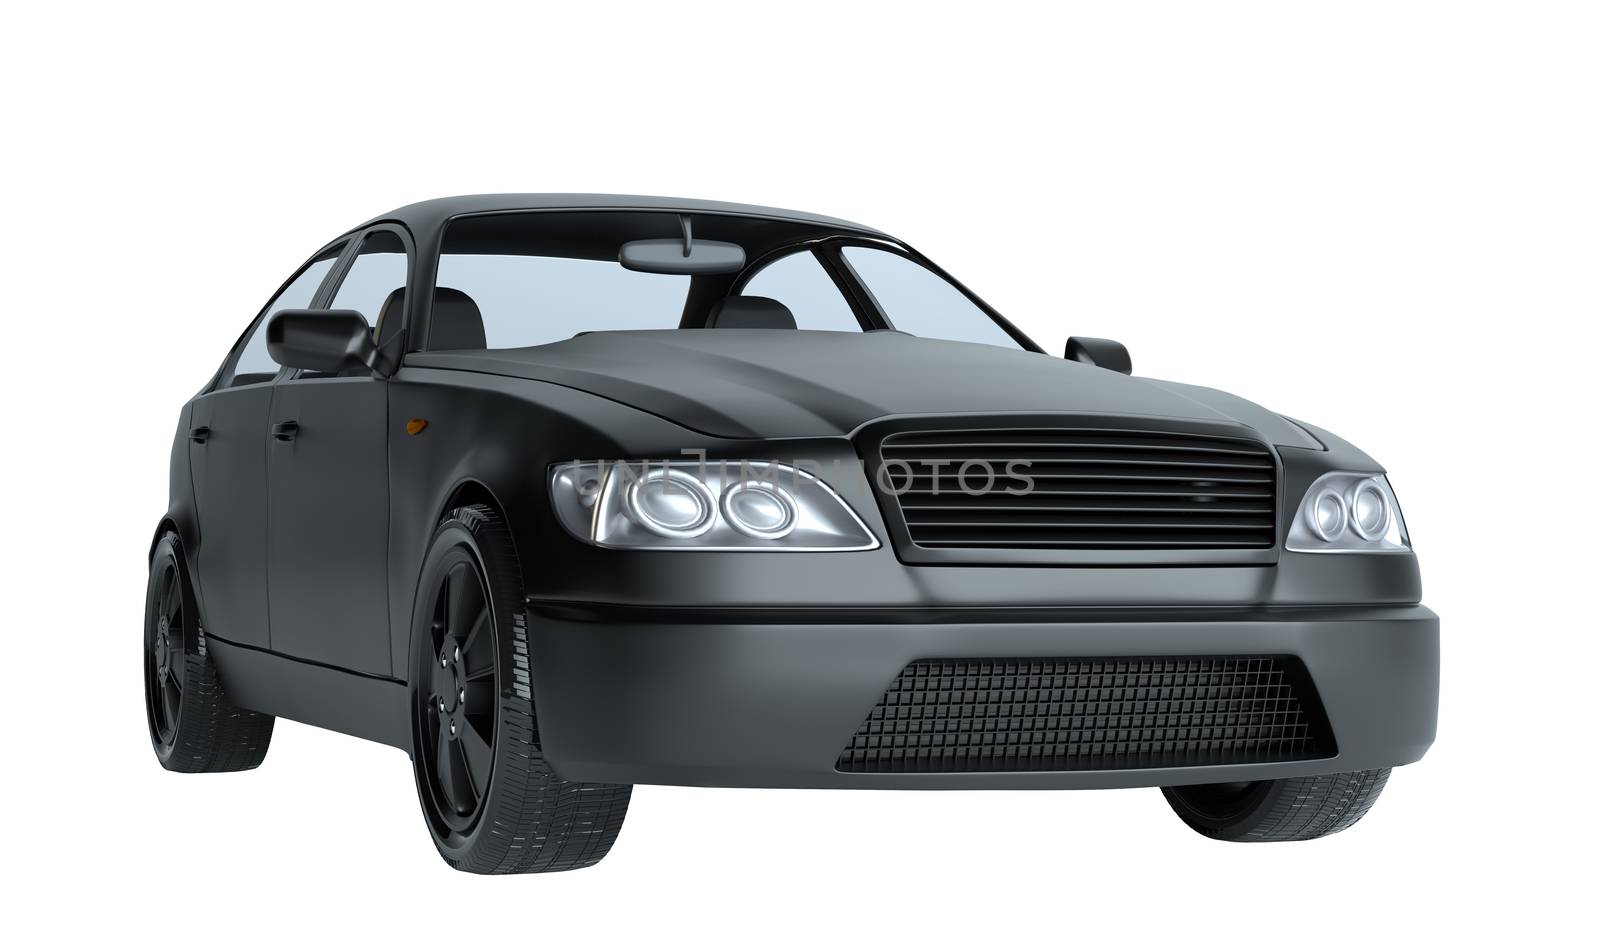 A CG render of a generic luxury sedan. 3d illustration